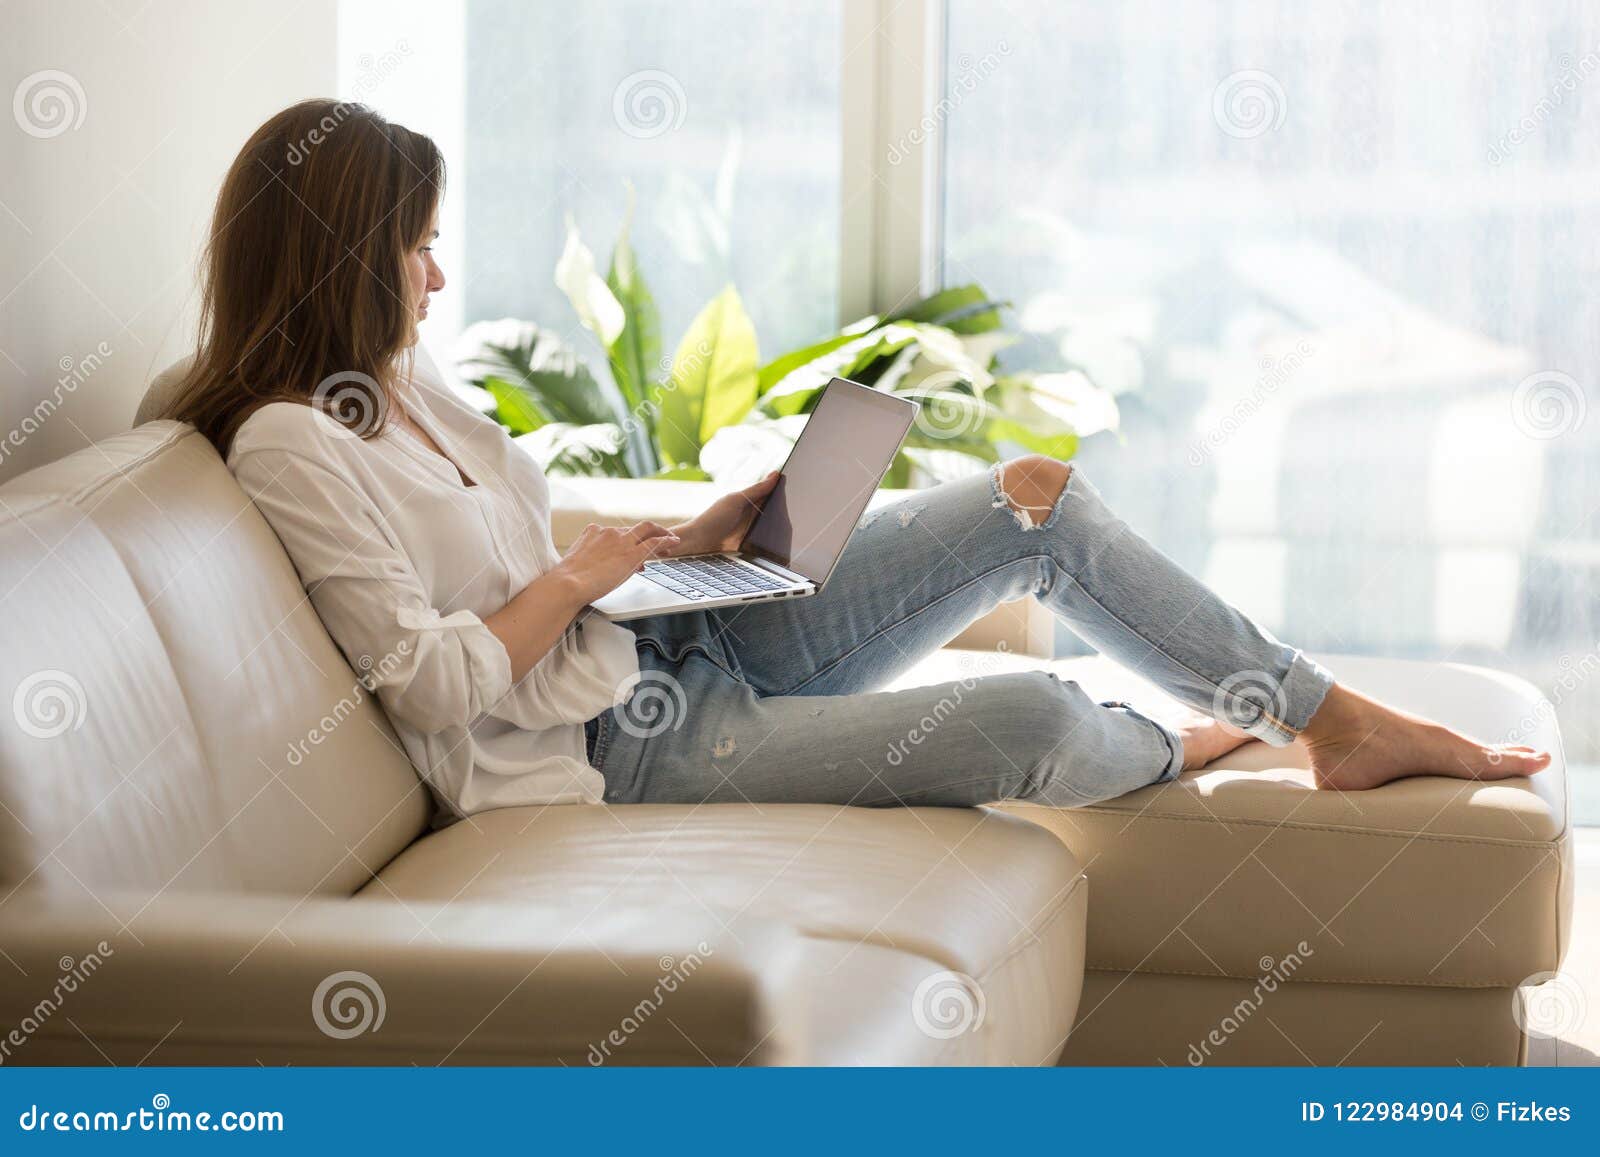 Sleutel Prestigieus Aannemer Happy Female Browsing Internet Sitting on Sofa at Home Stock Photo - Image  of person, apartment: 122984904